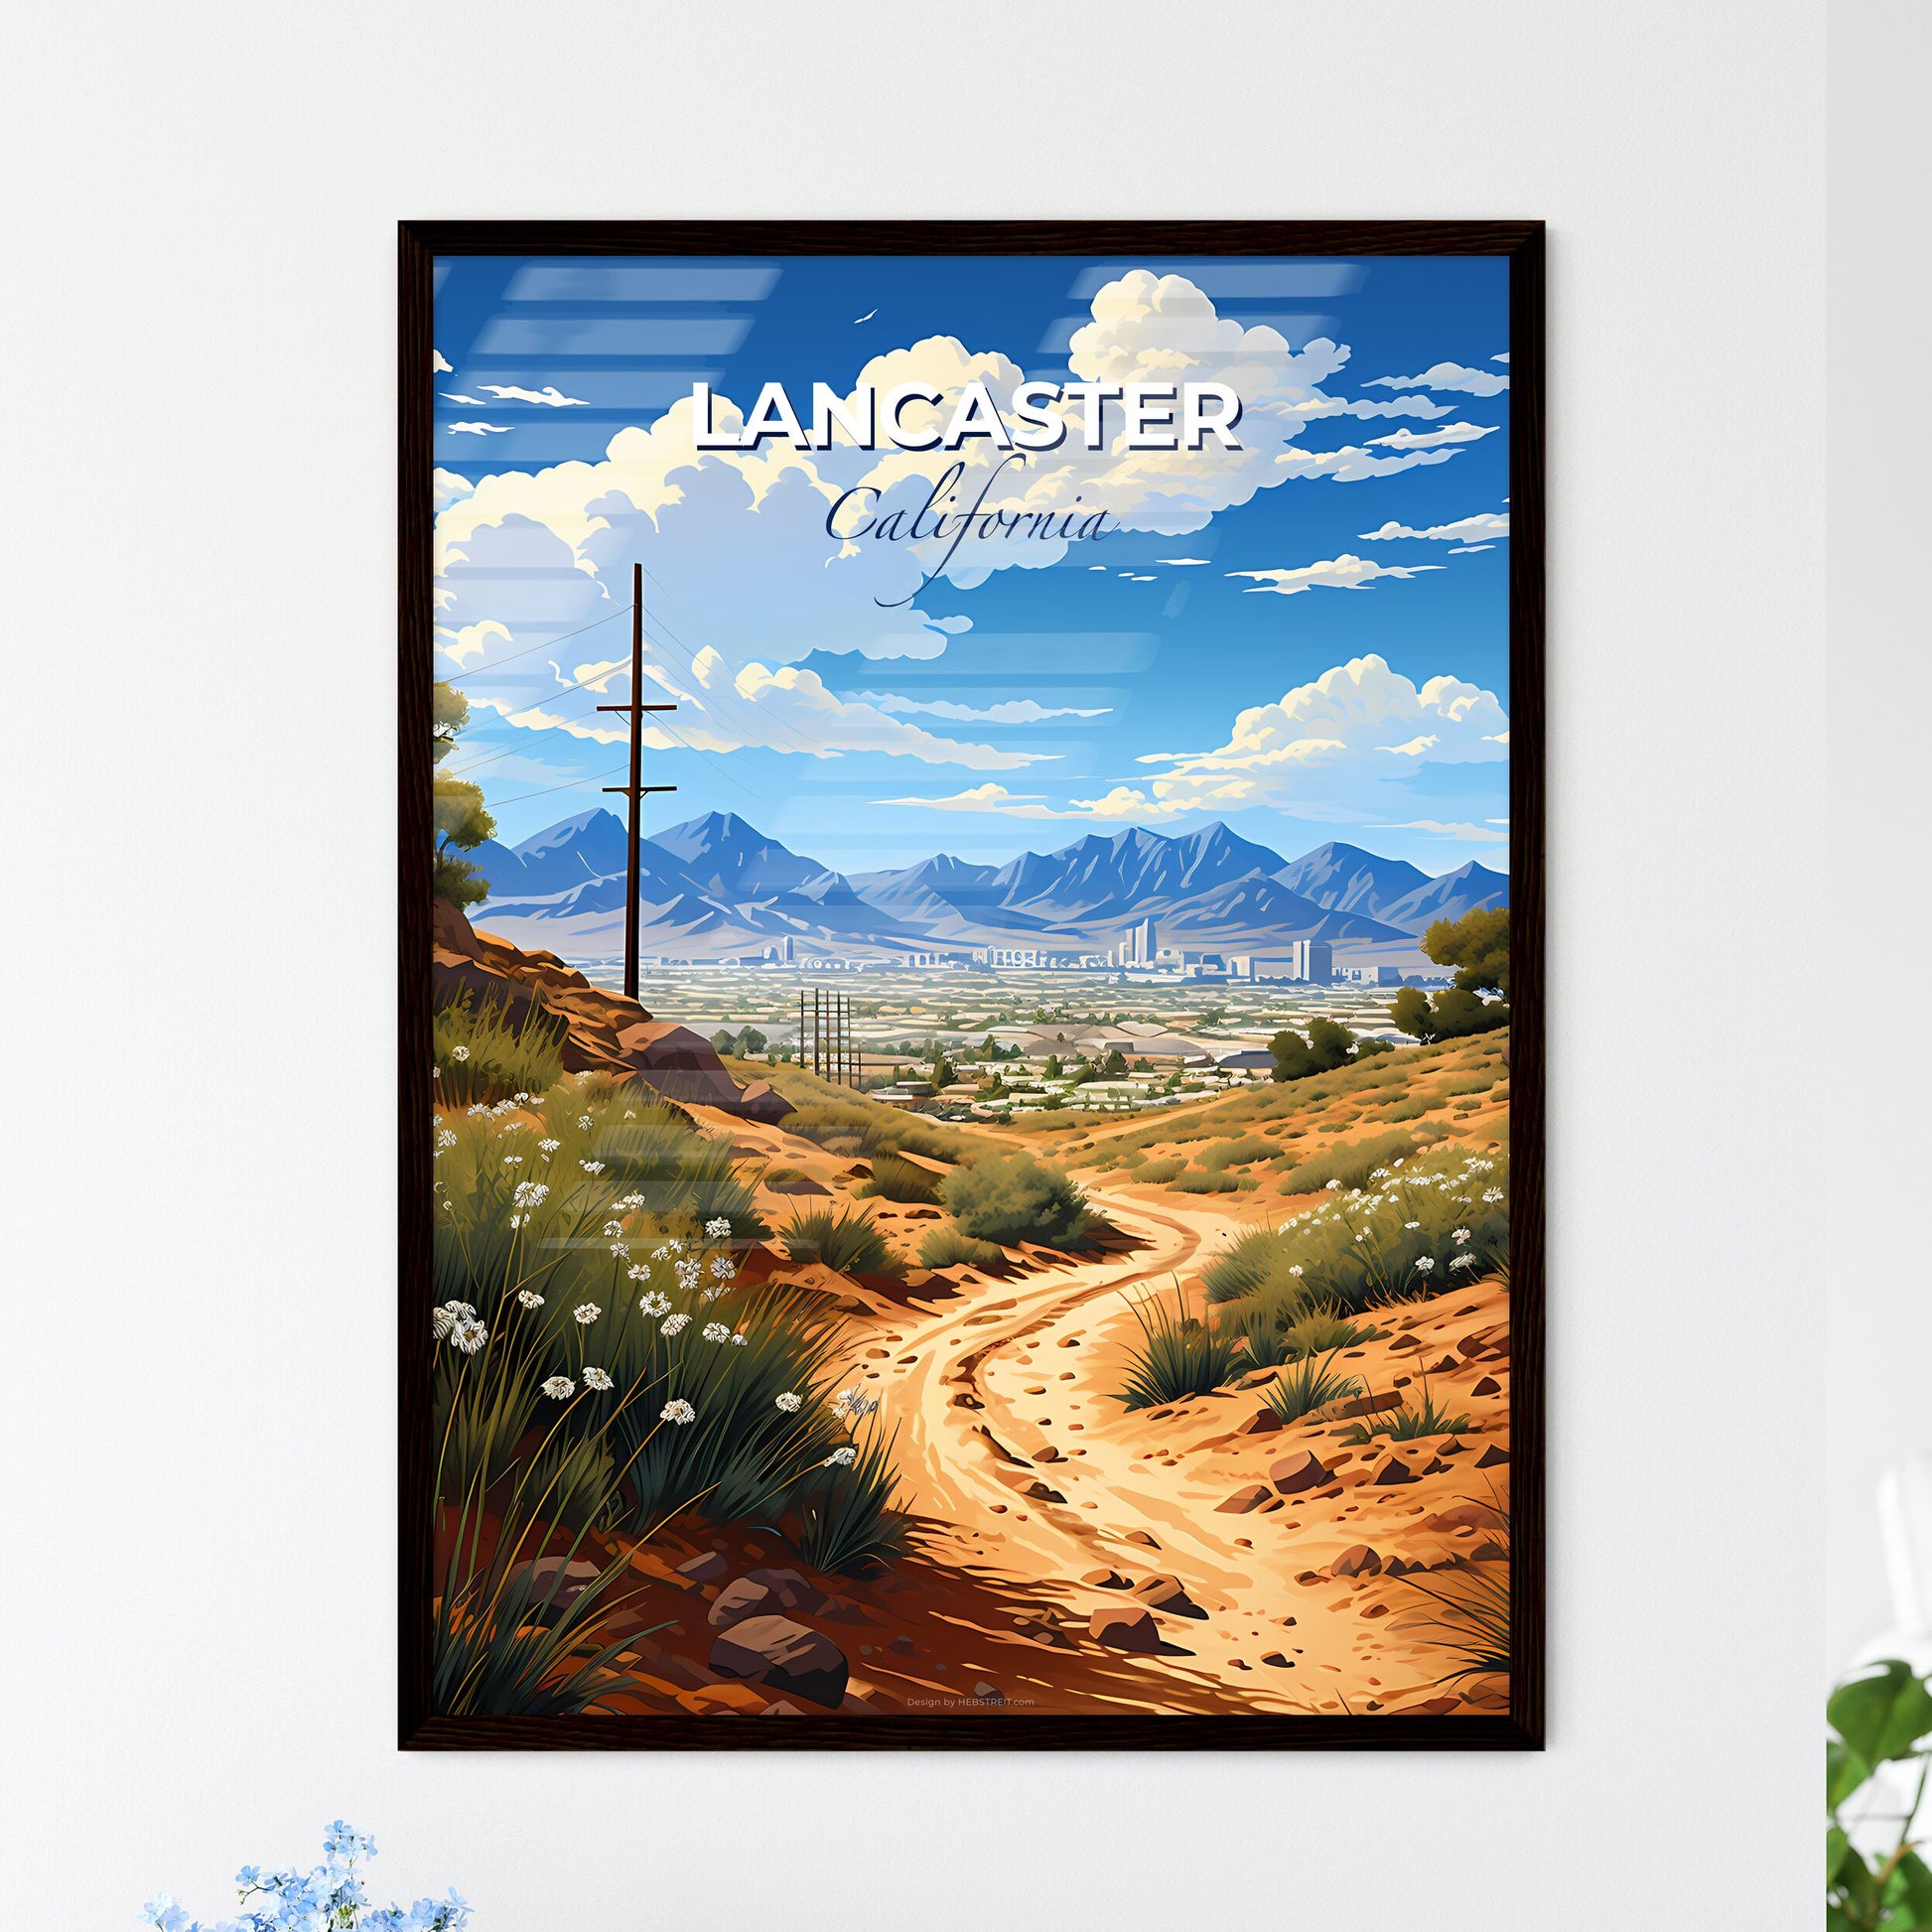 Lancaster, California, A Poster of a dirt road through a desert landscape Default Title